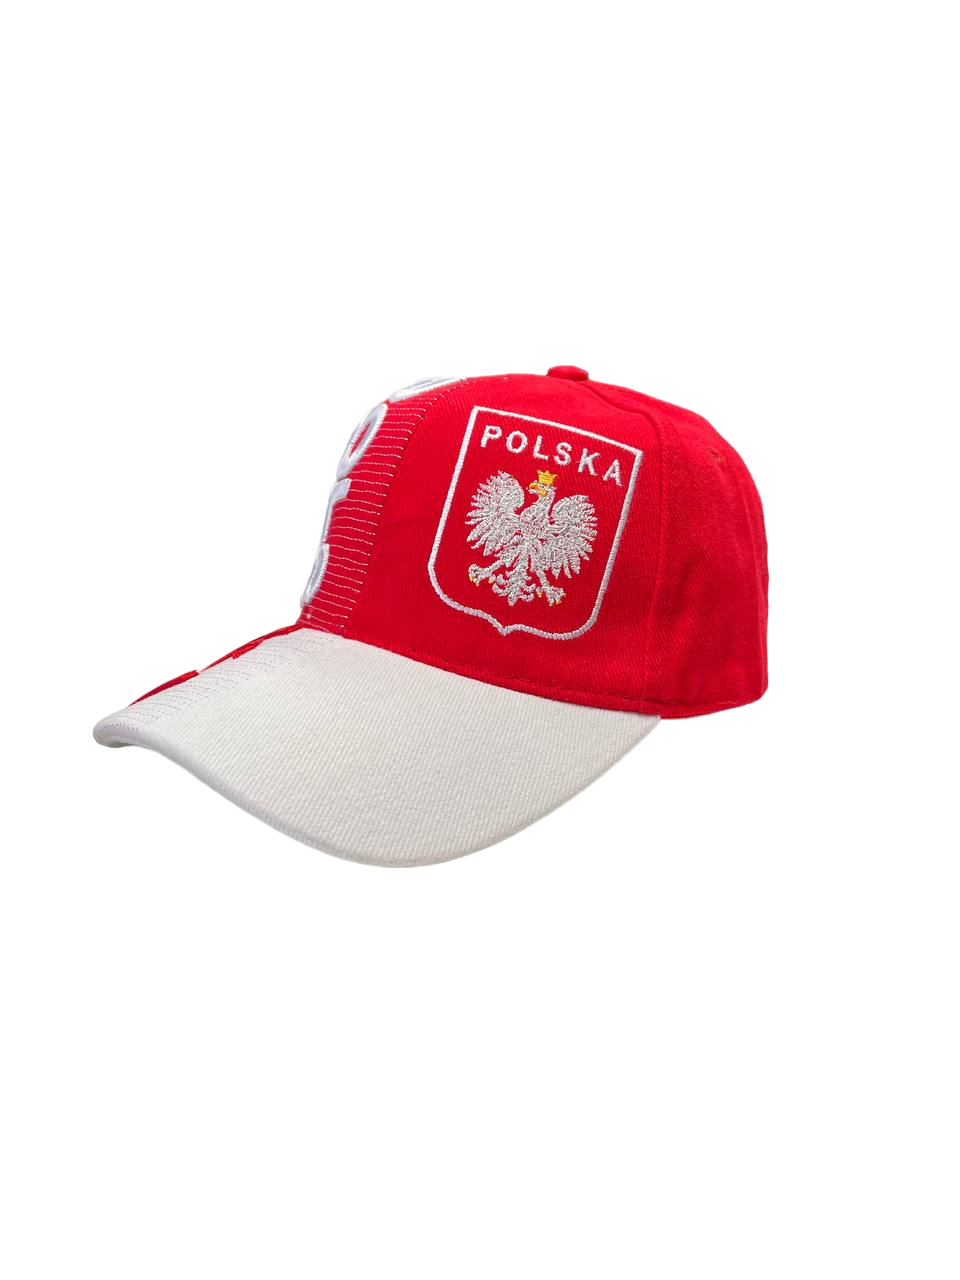 Polish Cap With Polska Flag Red&White Embroidered